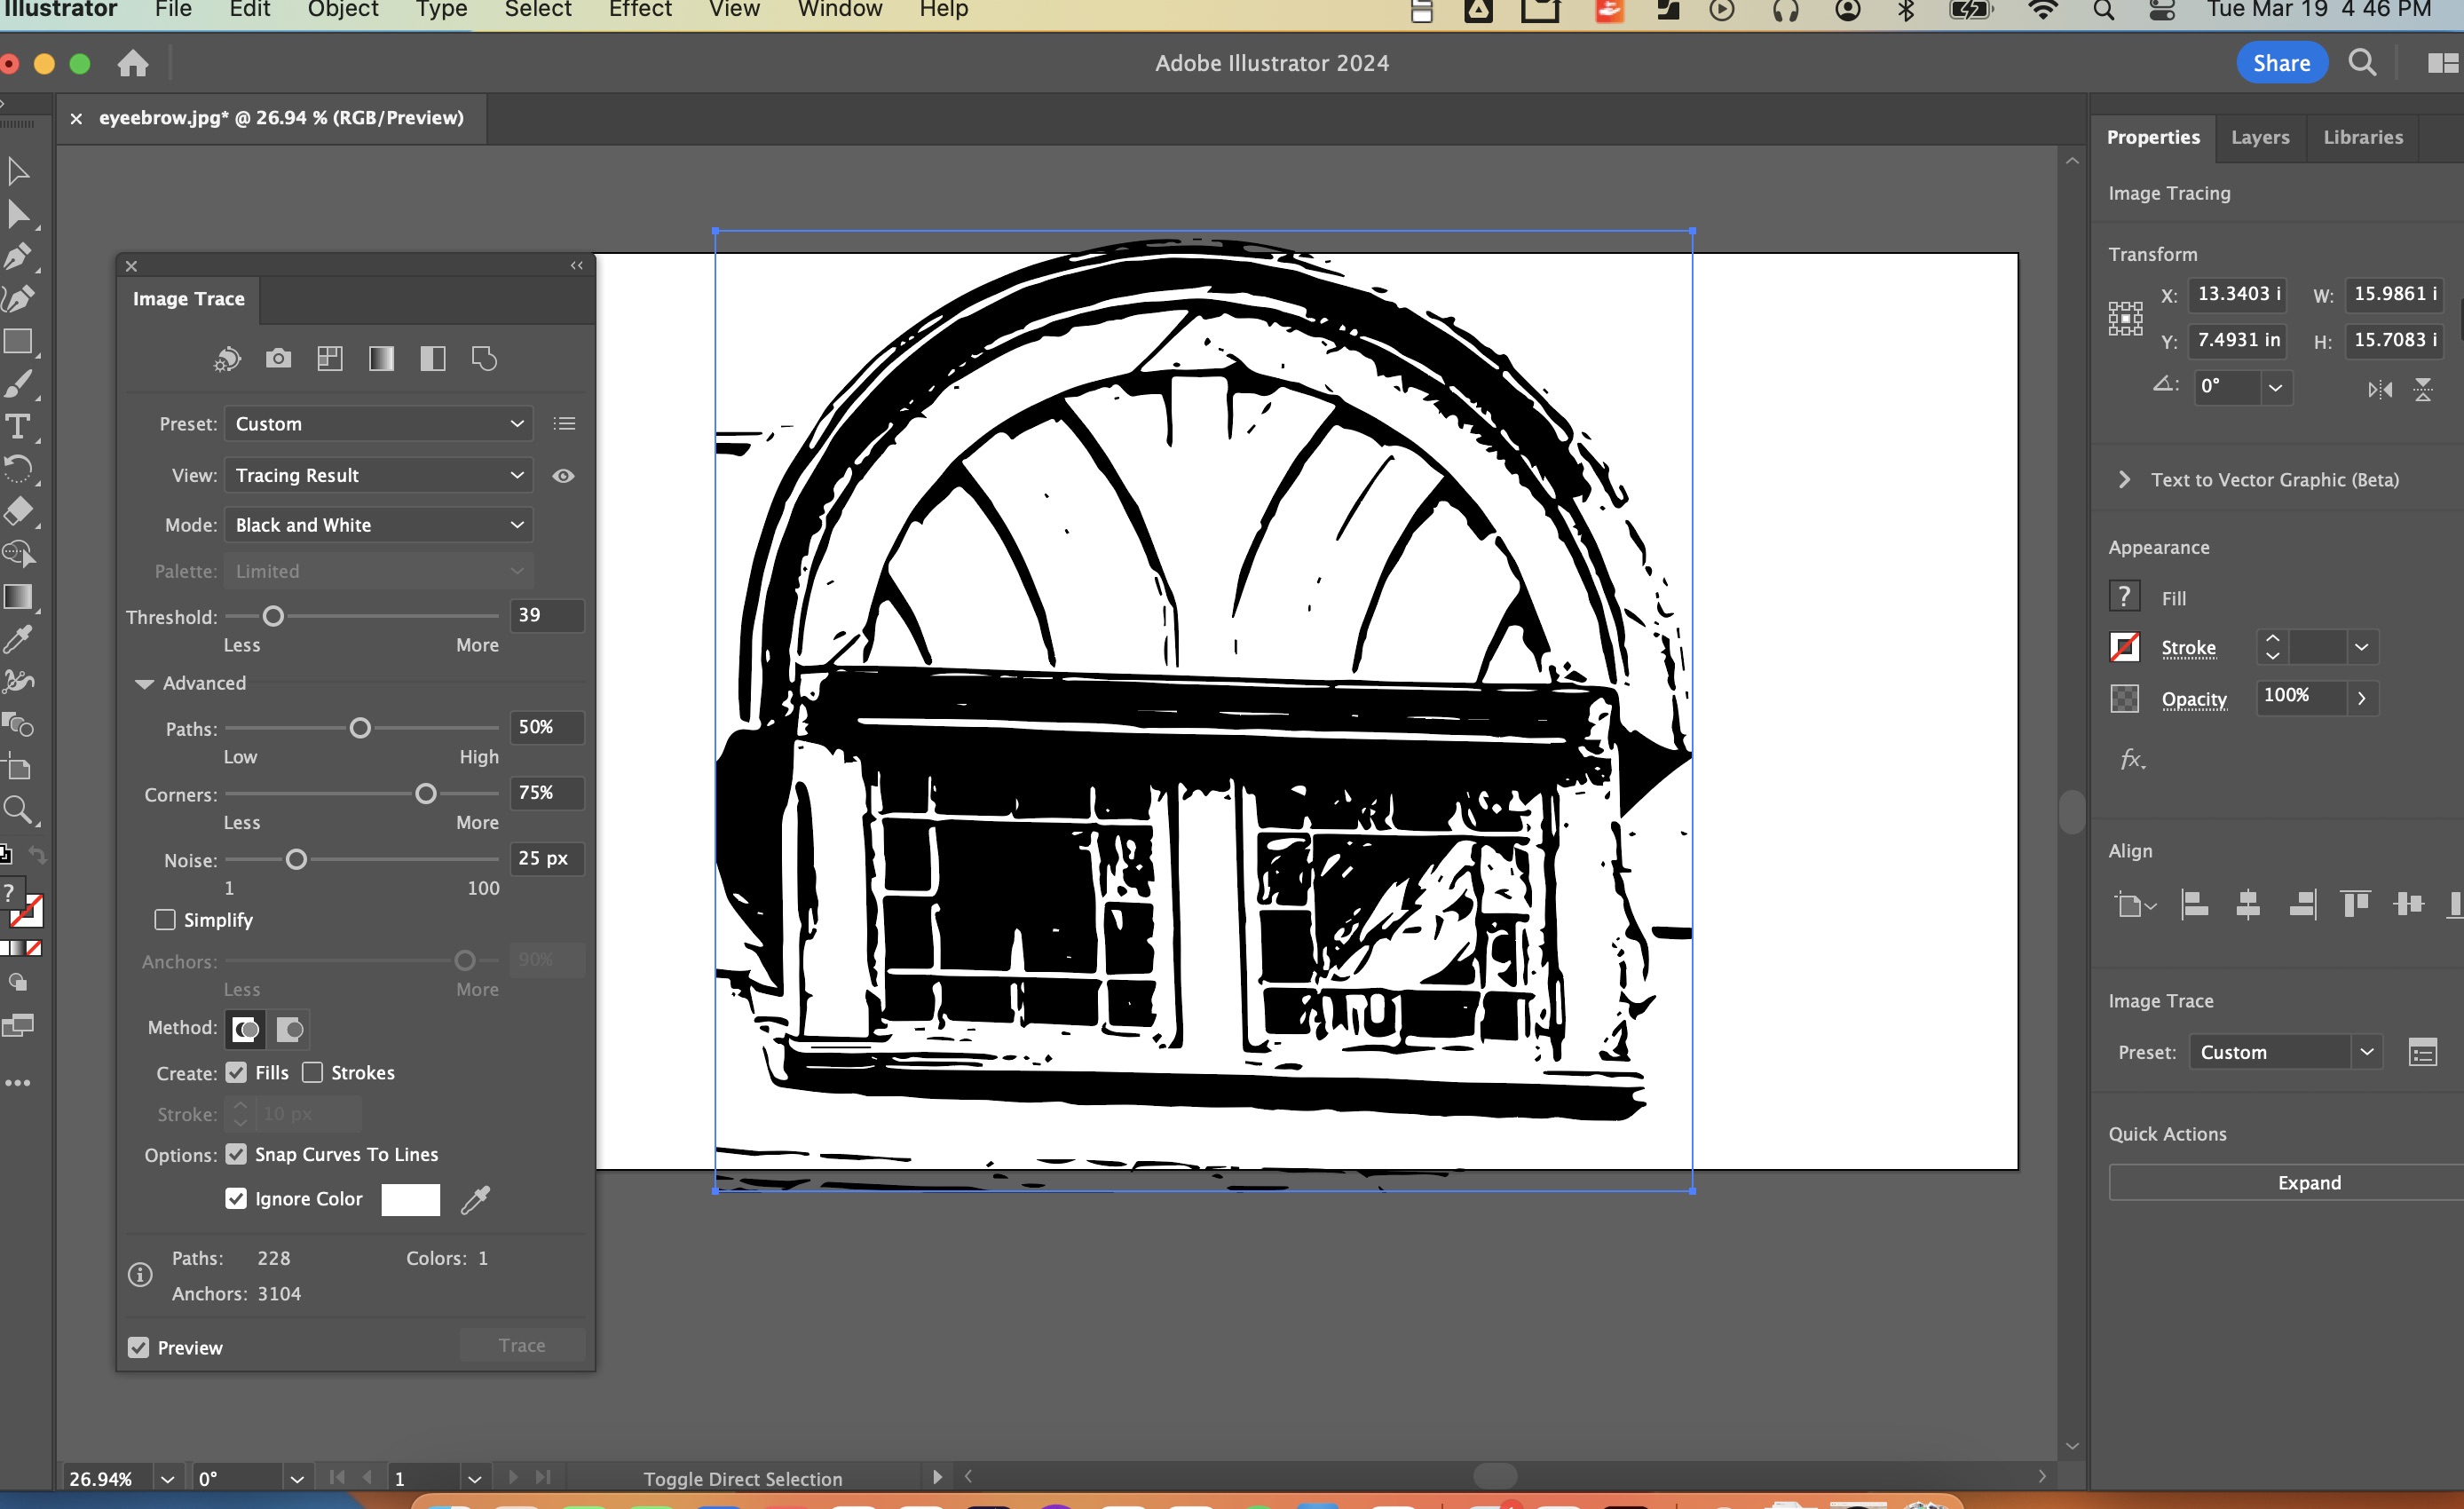 Adobe Illustrator Trace Image